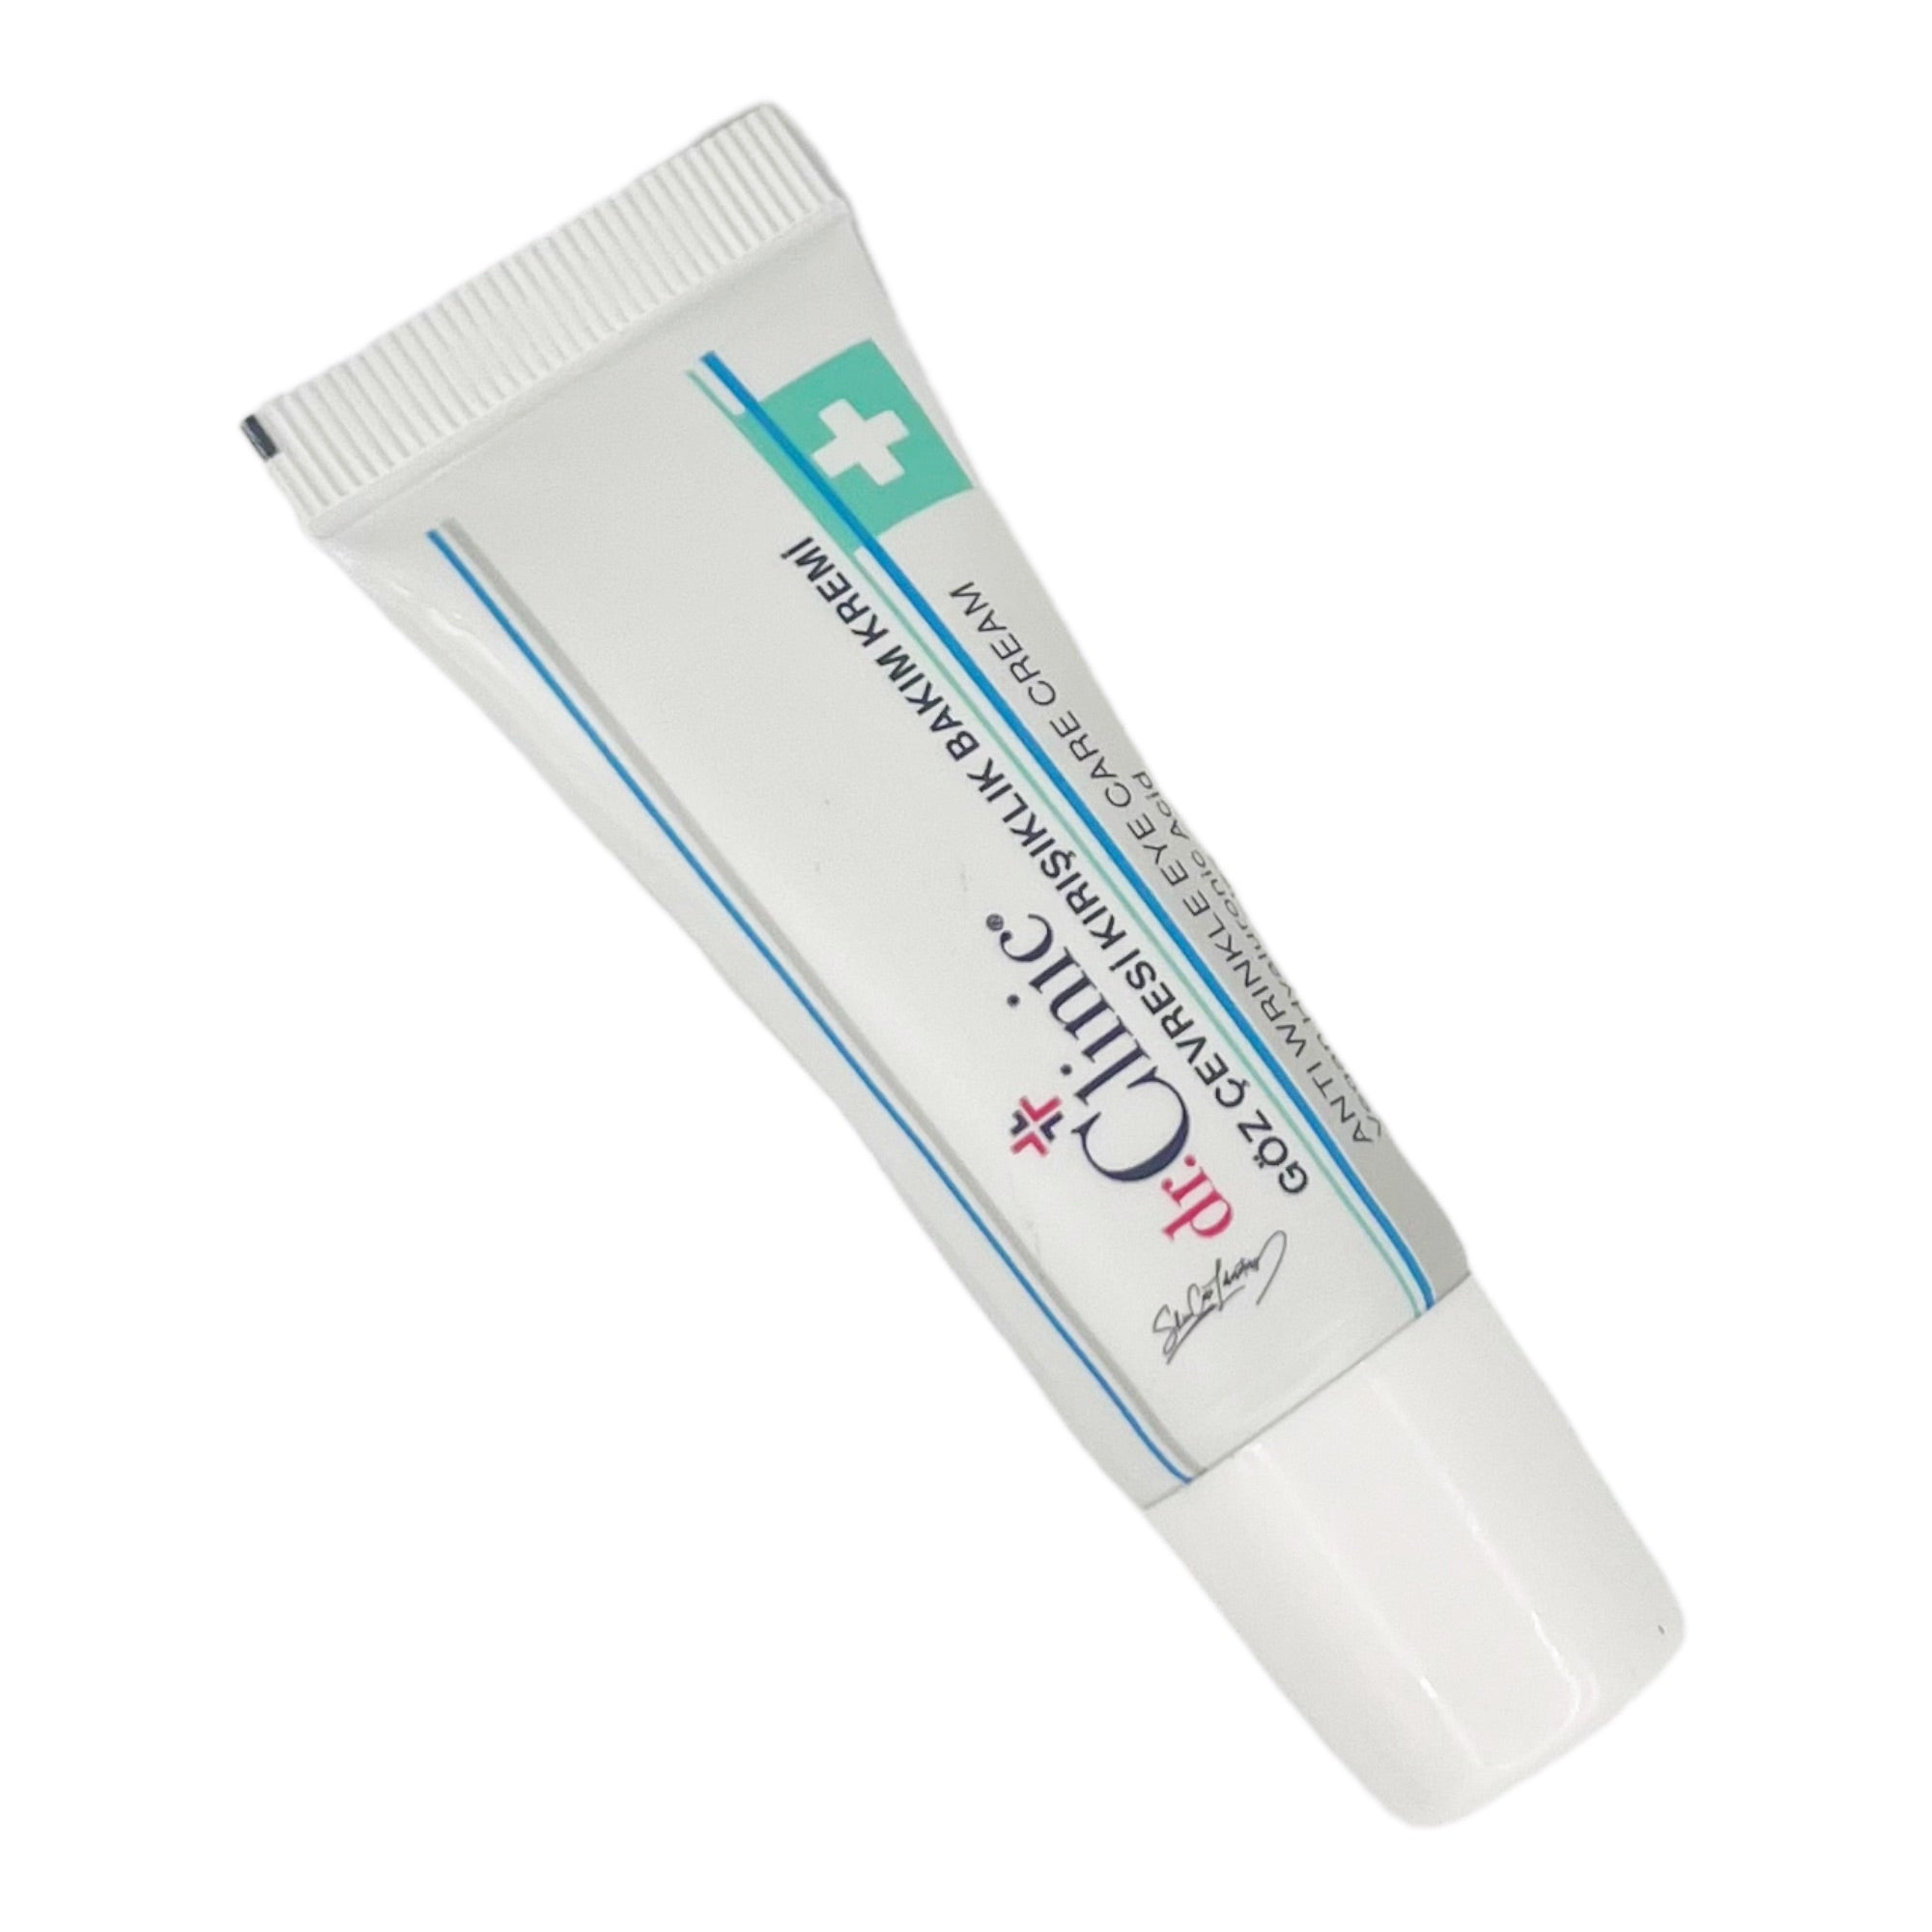 Dr.Clinic - Anti Wrinkle Eye Care Cream 15ml - Eson Direct